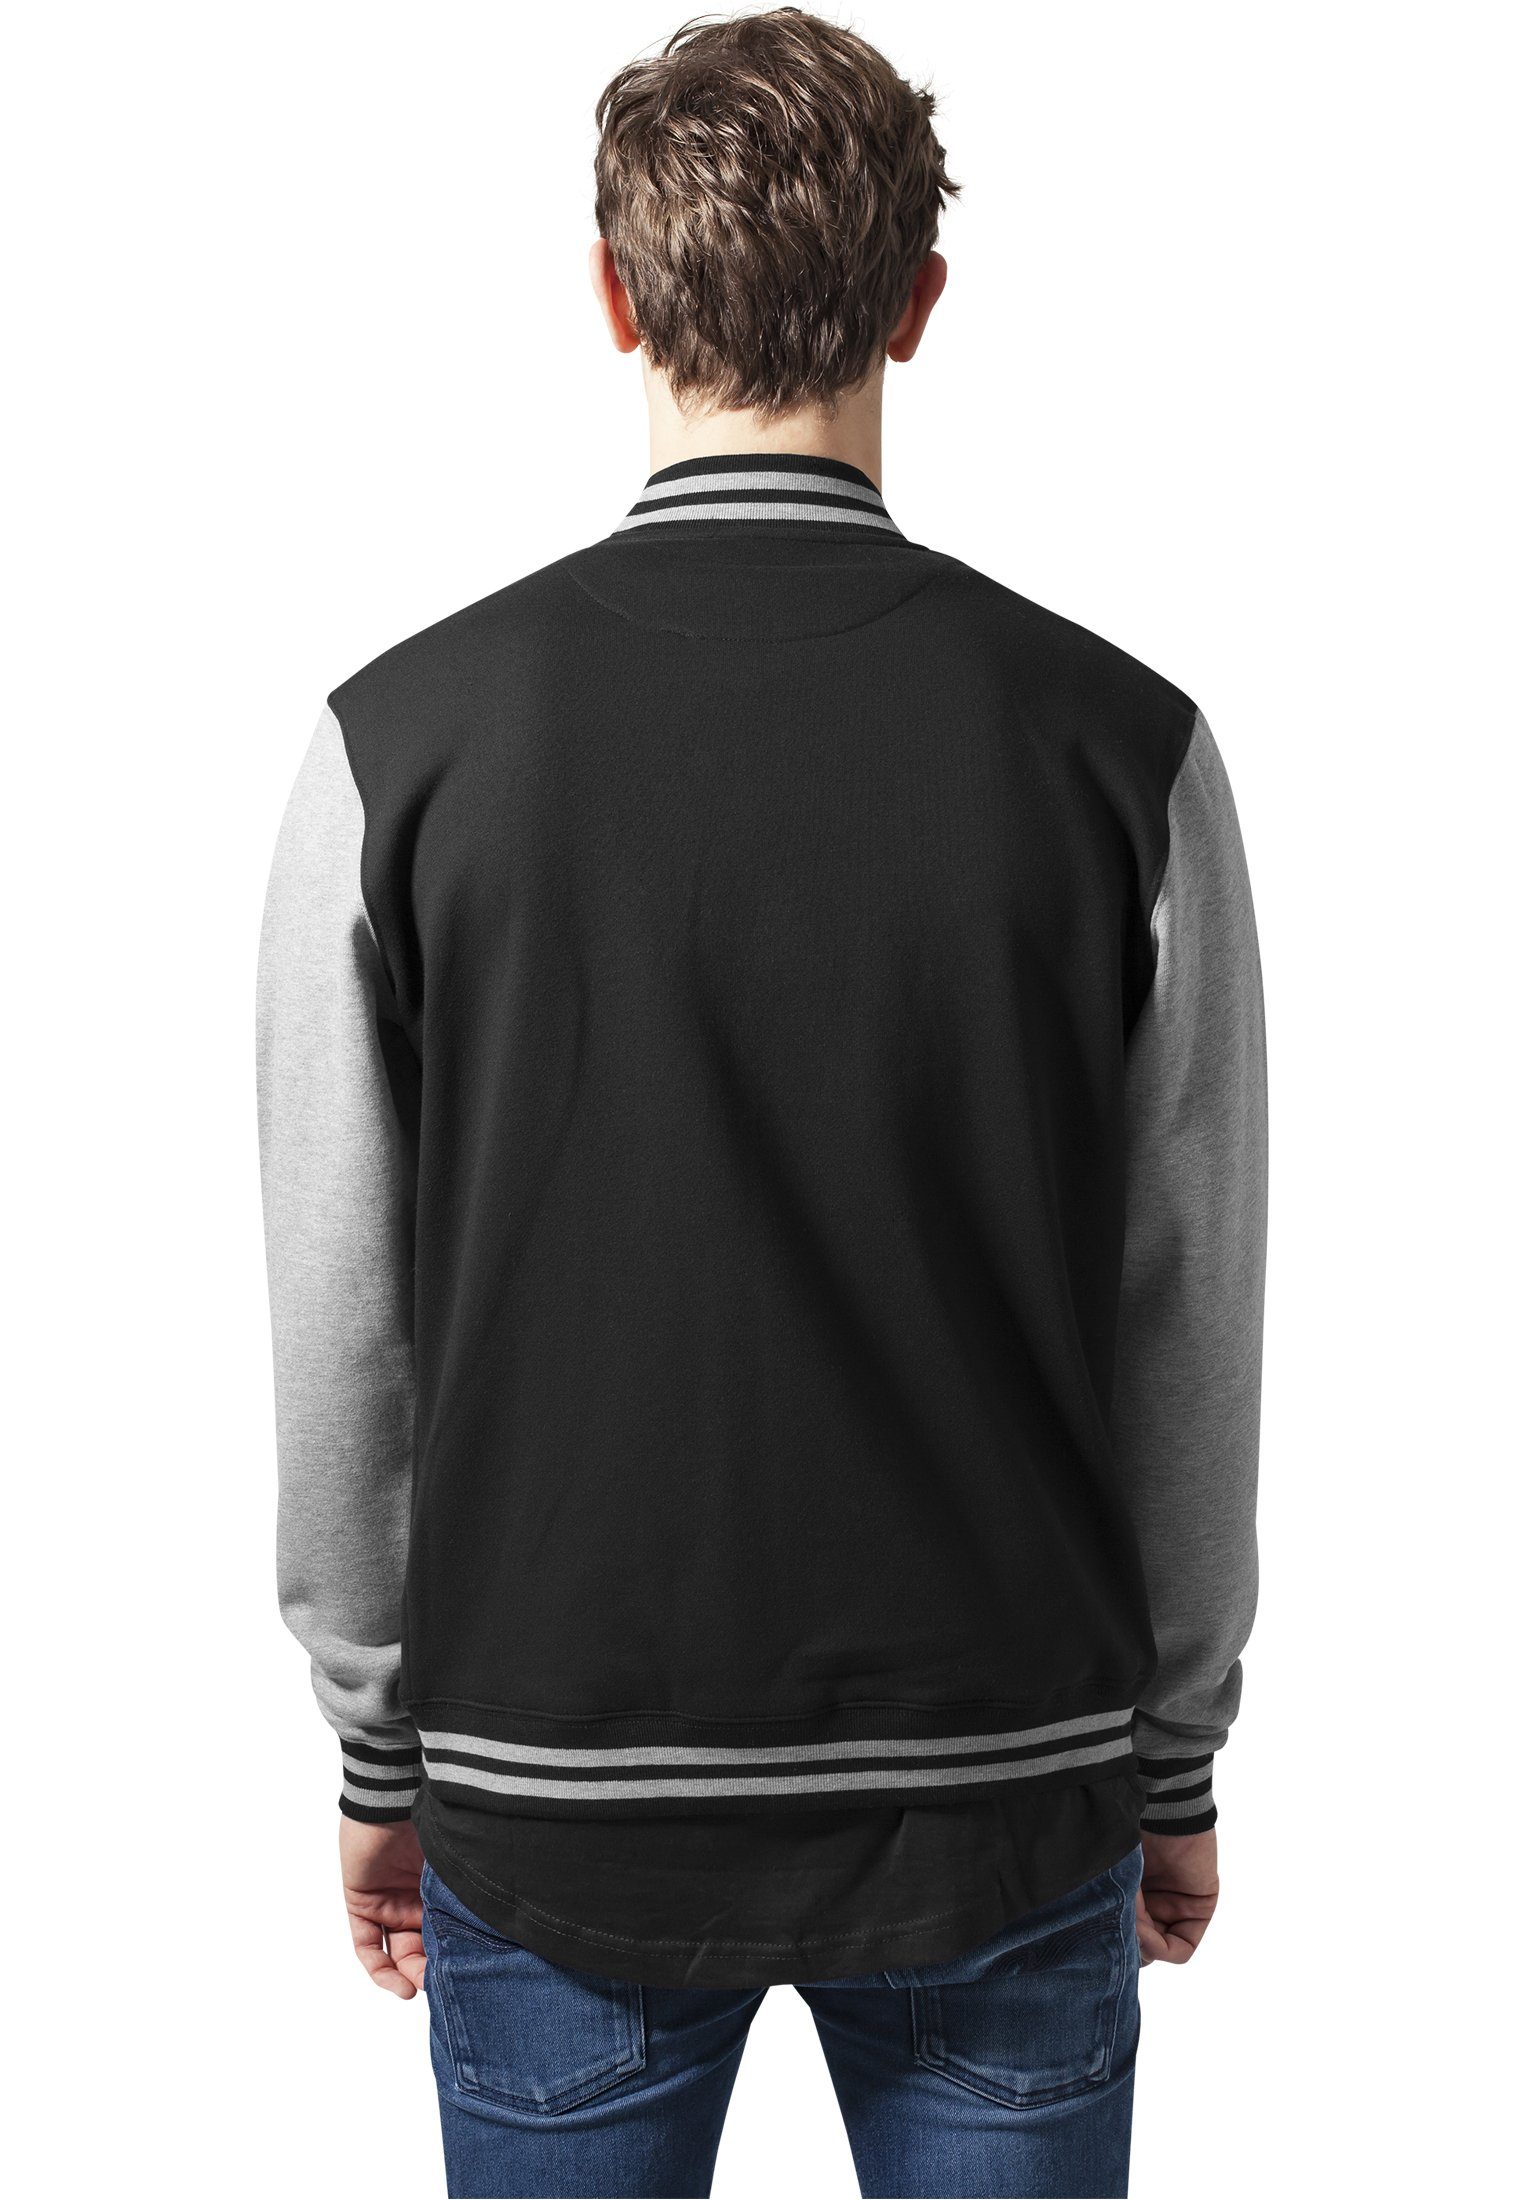 2-tone CLASSICS (1-St) Outdoorjacke College URBAN Sweatjacket black/grey Herren